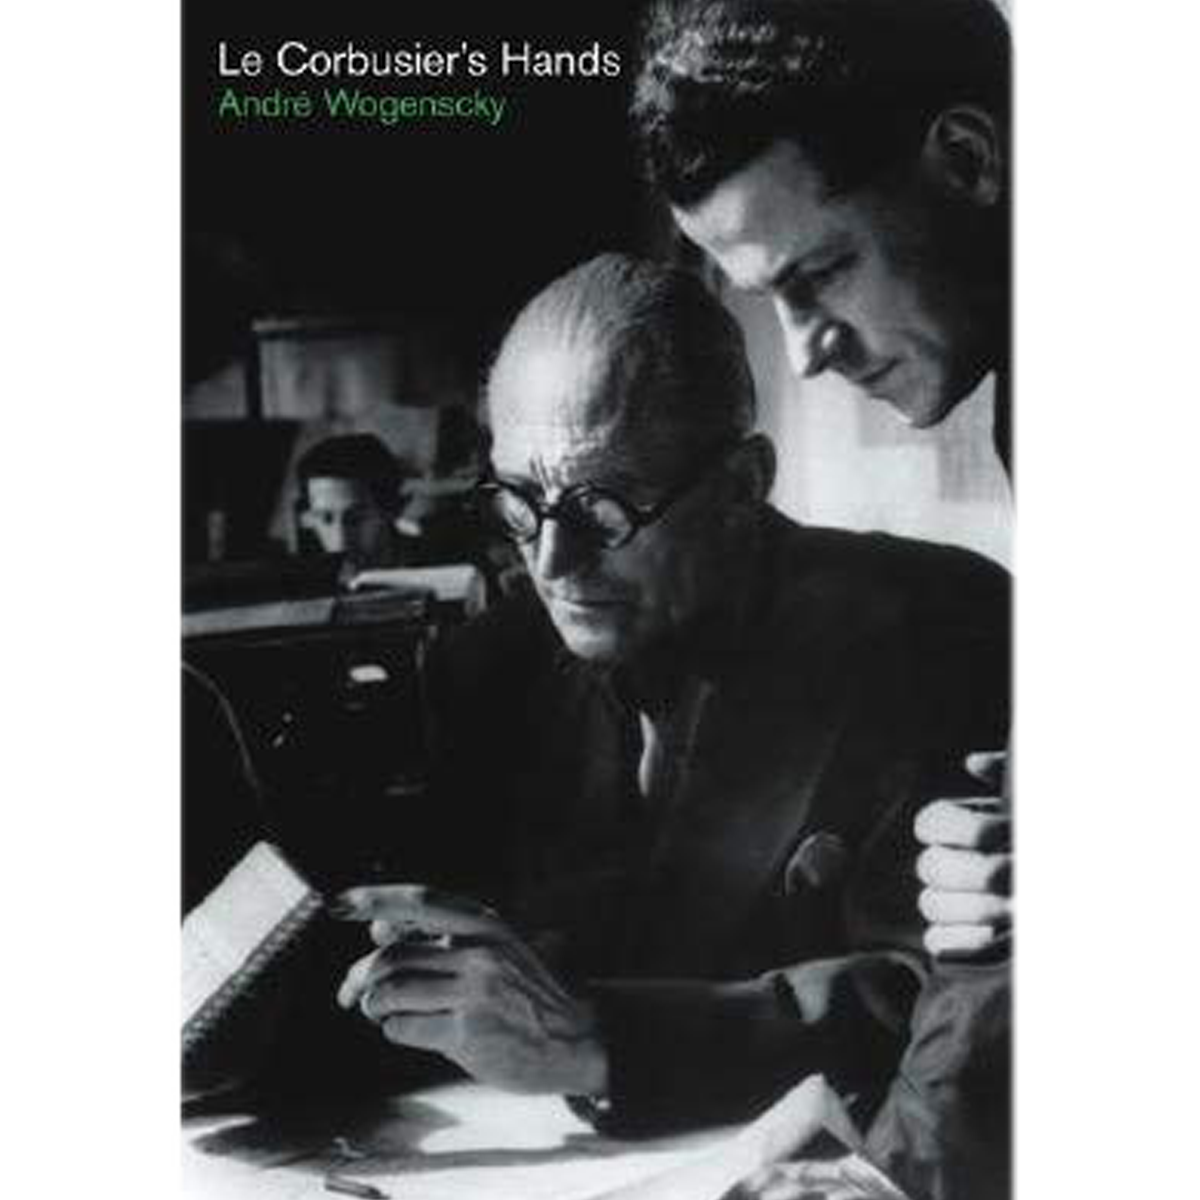 Le Corbusier’s Hands